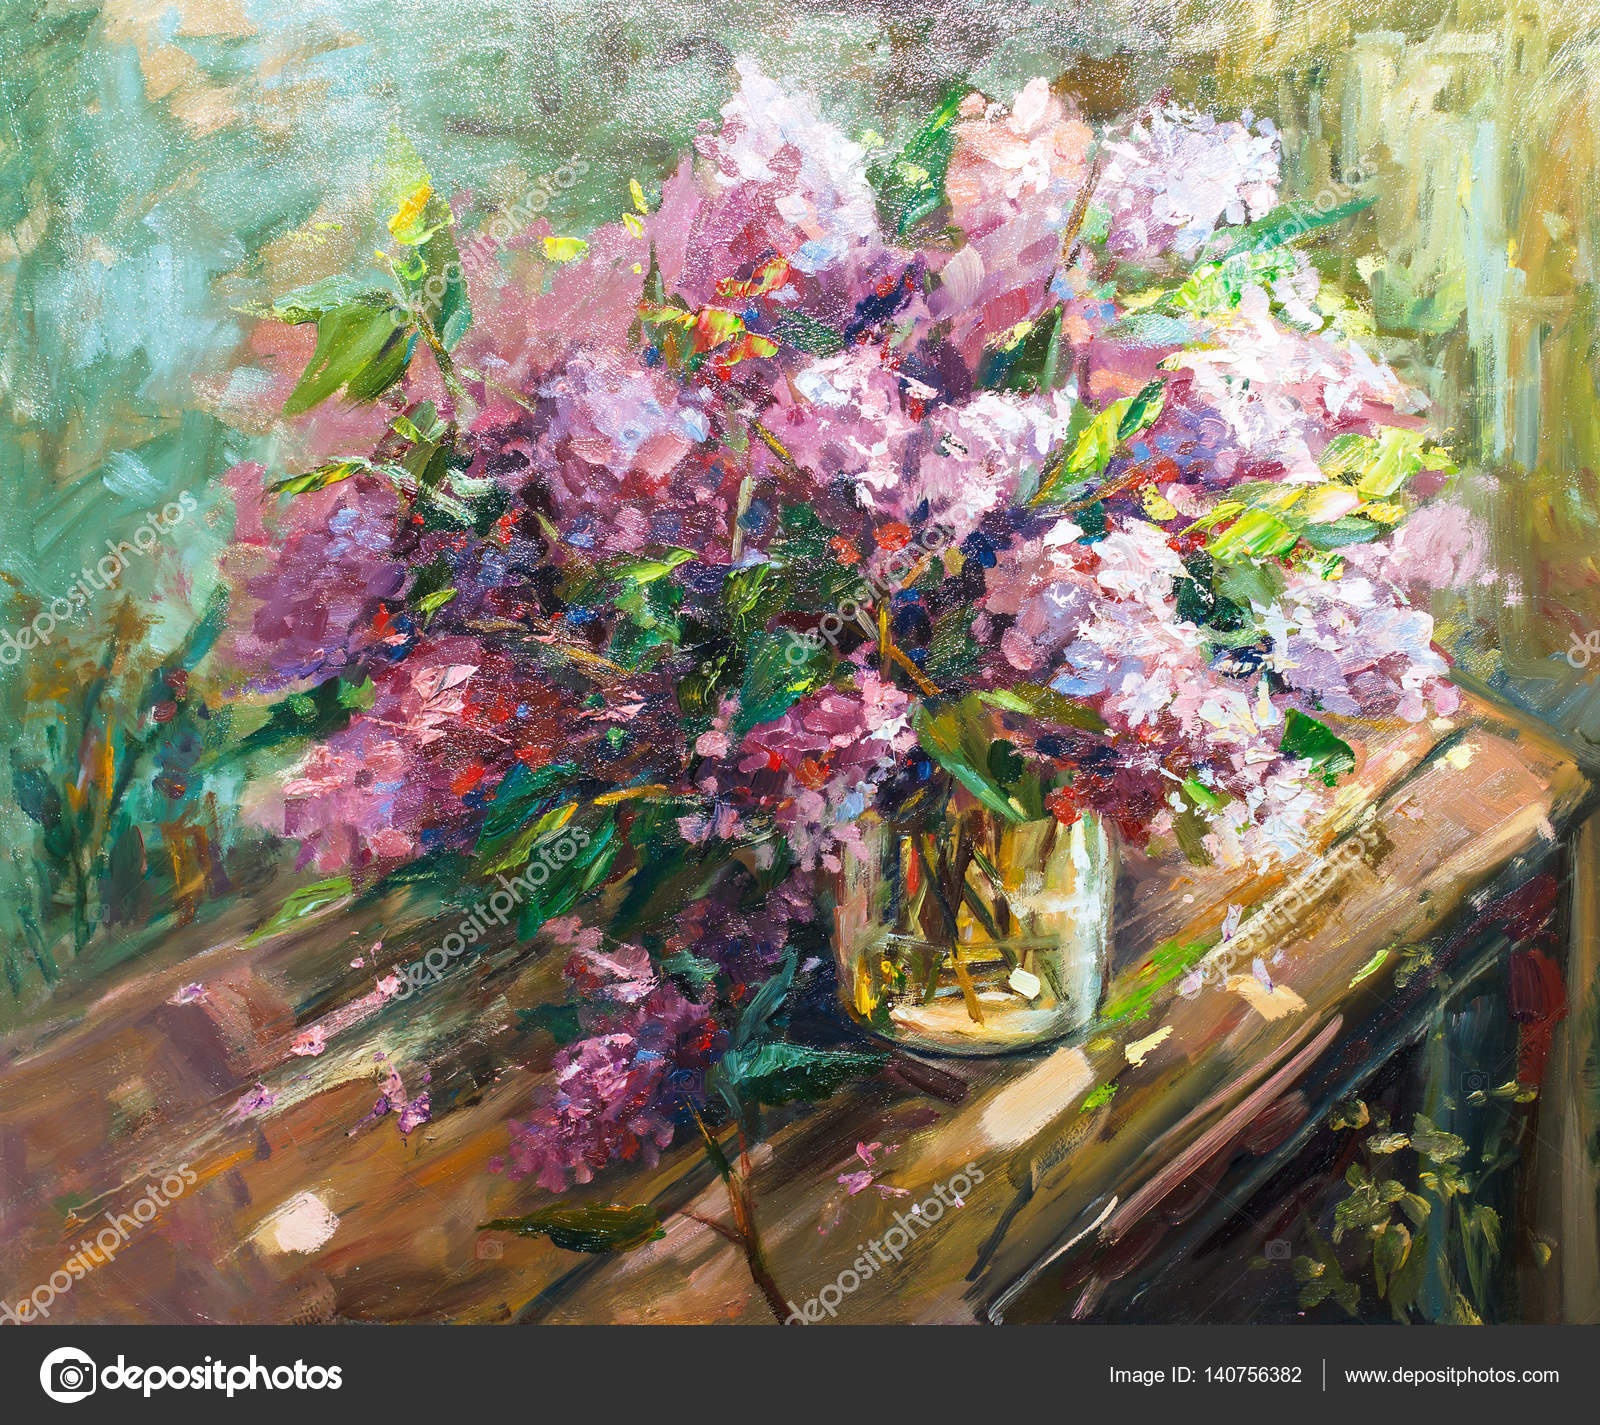 https://st3.depositphotos.com/5574548/14075/i/1600/depositphotos_140756382-stock-illustration-flowers-lilac-oil-painting-impressionism.jpg